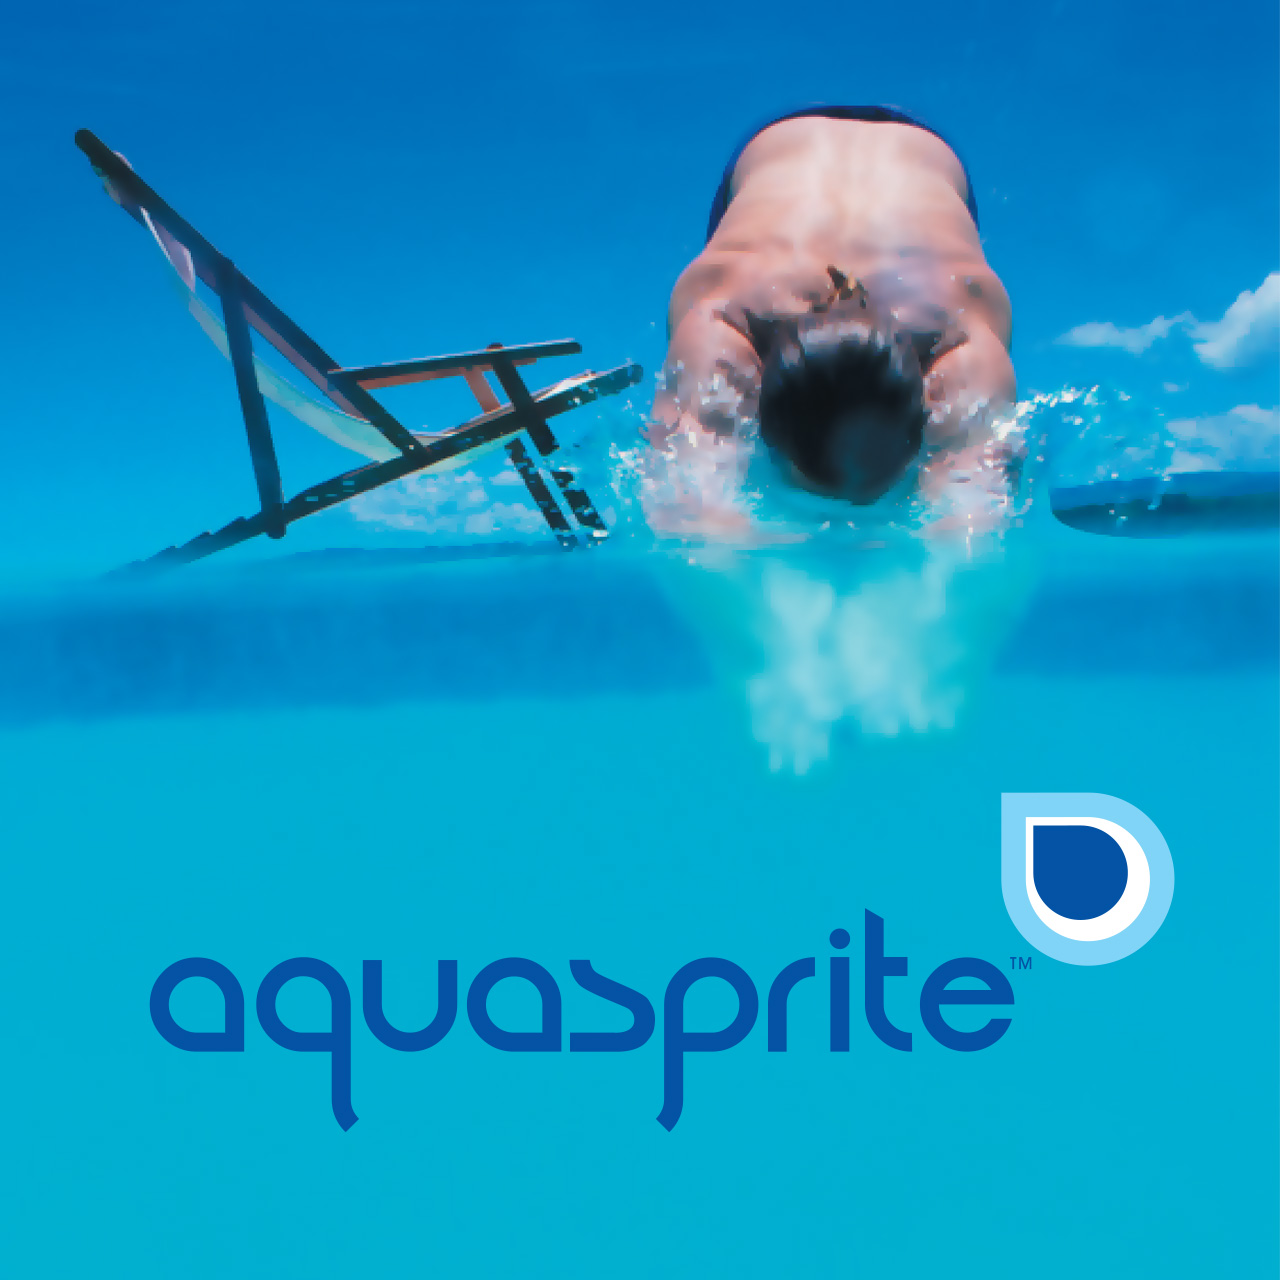 Aquasprite logo